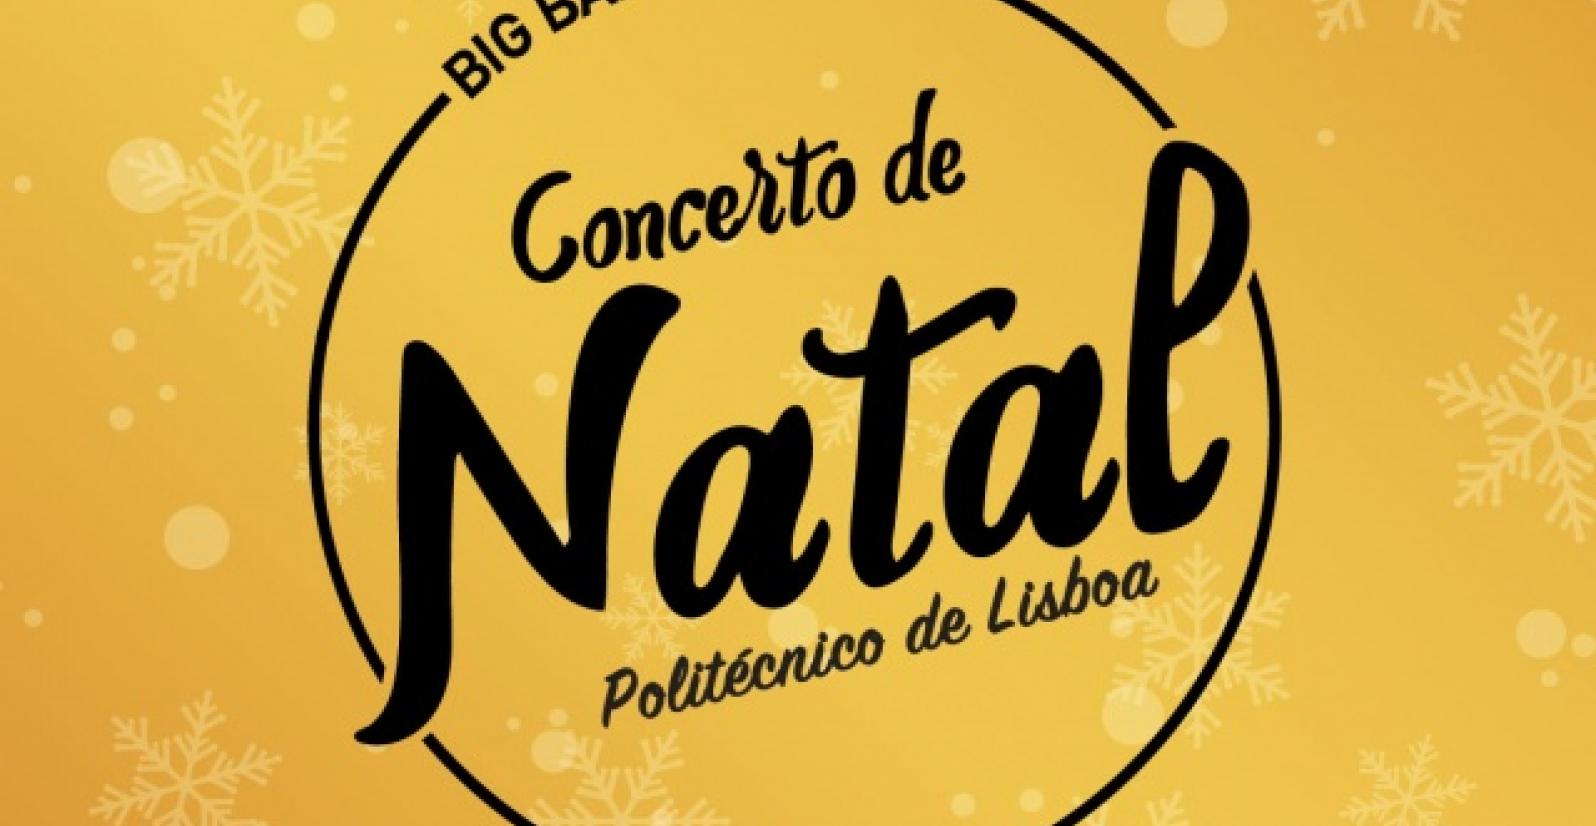 concerto_de_natal_ipl_noticia_imagem_principal-01.jpg